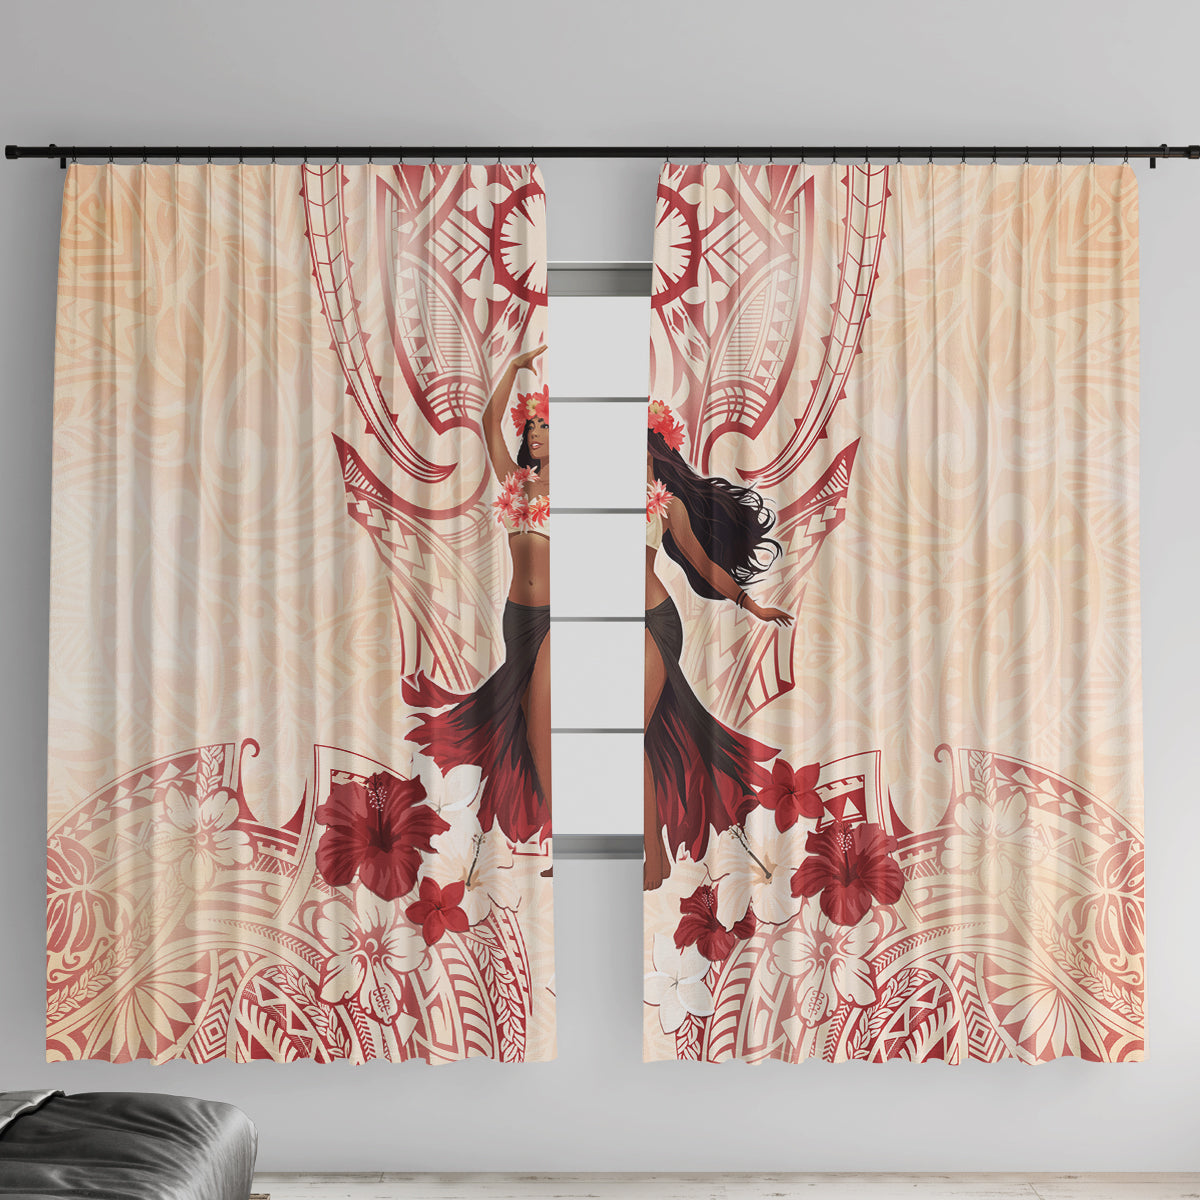 Tahiti Women's Day Window Curtain With Polynesian Pattern